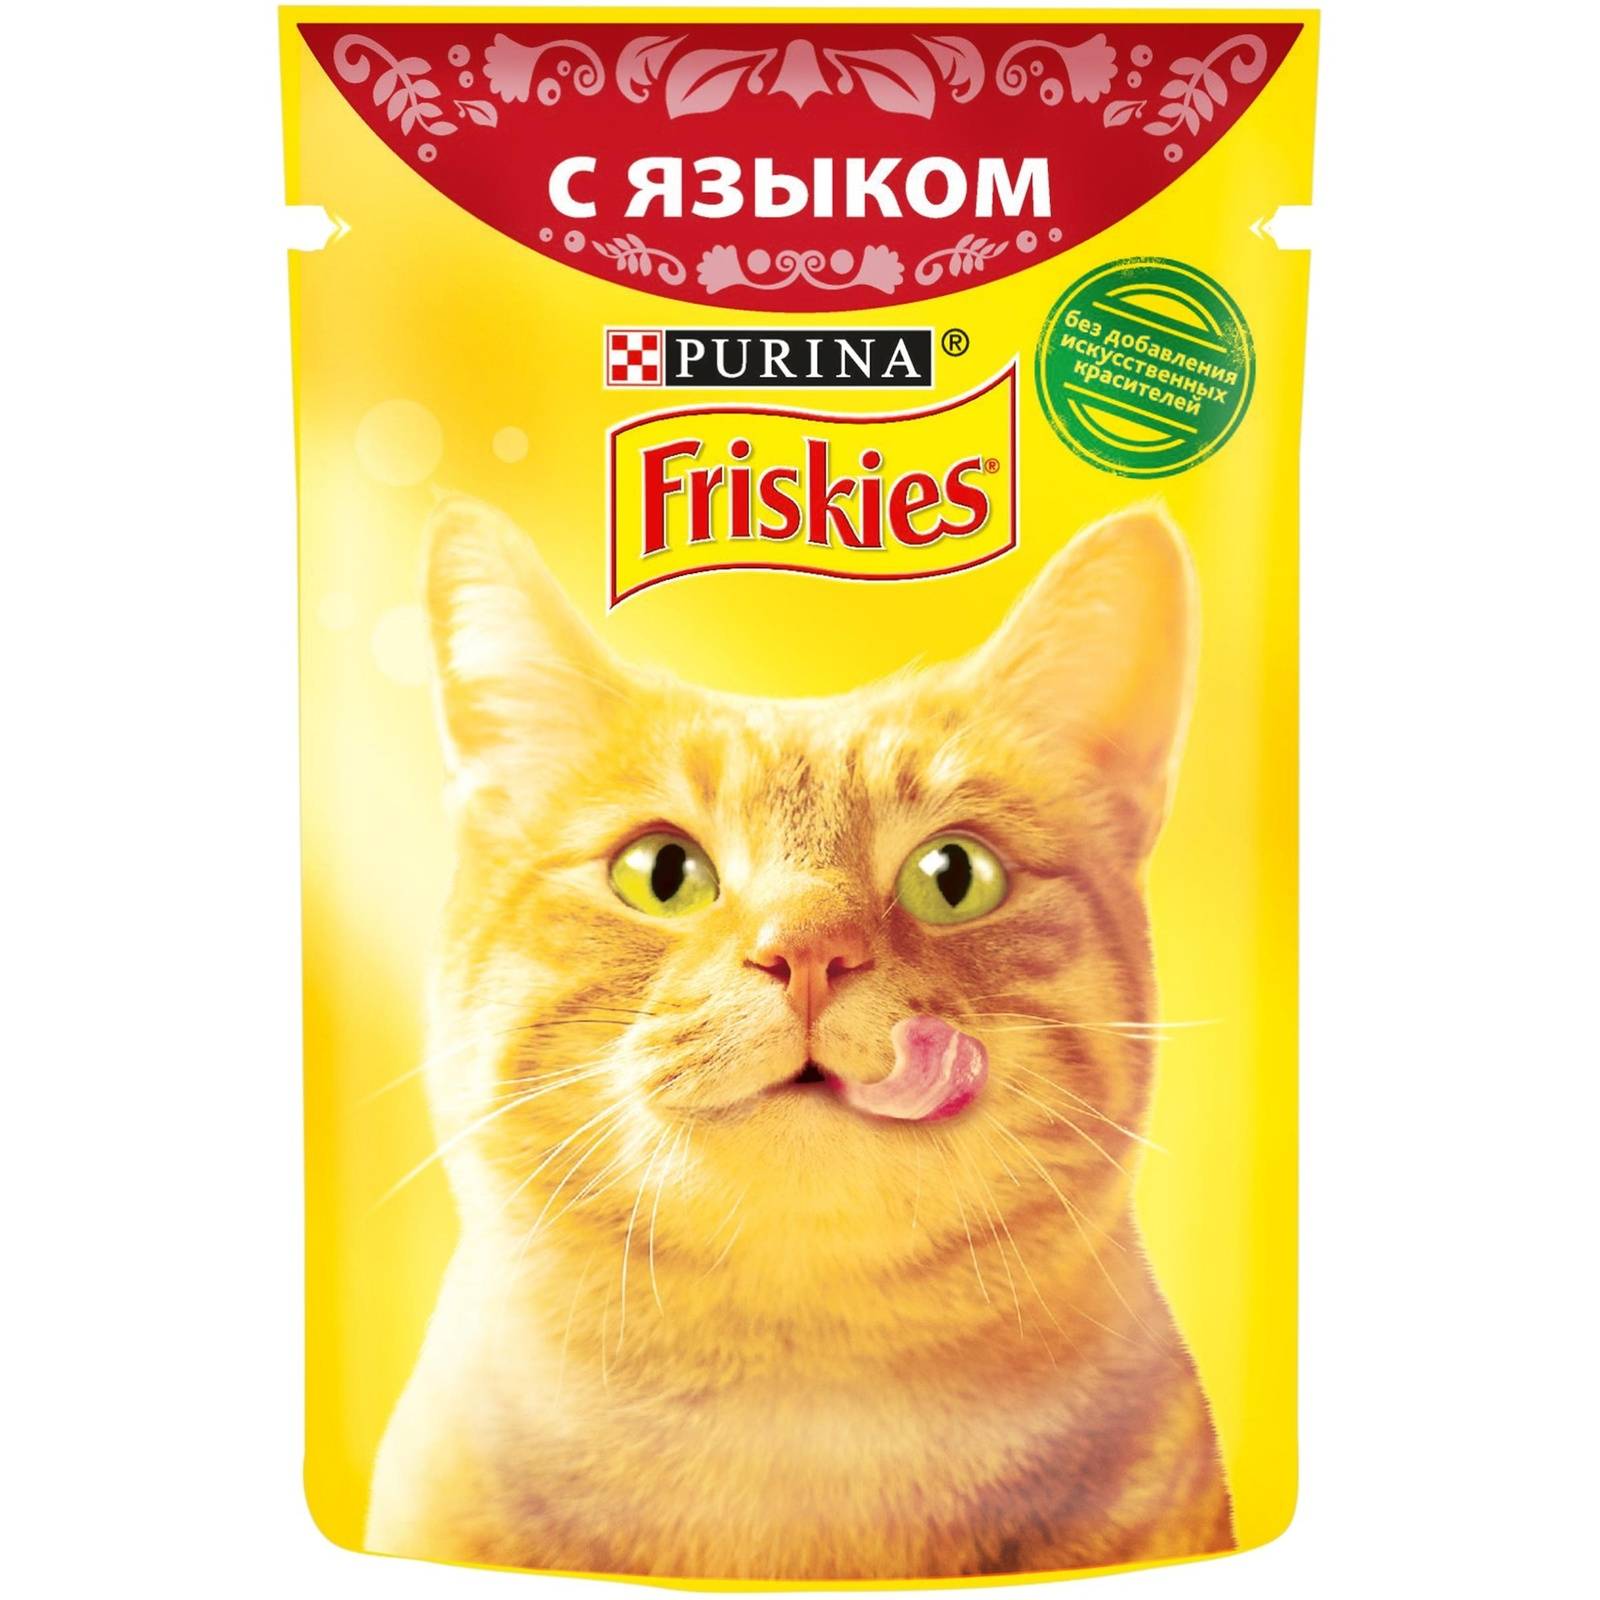 Обзор кормов для кошек фрискис (friskies)